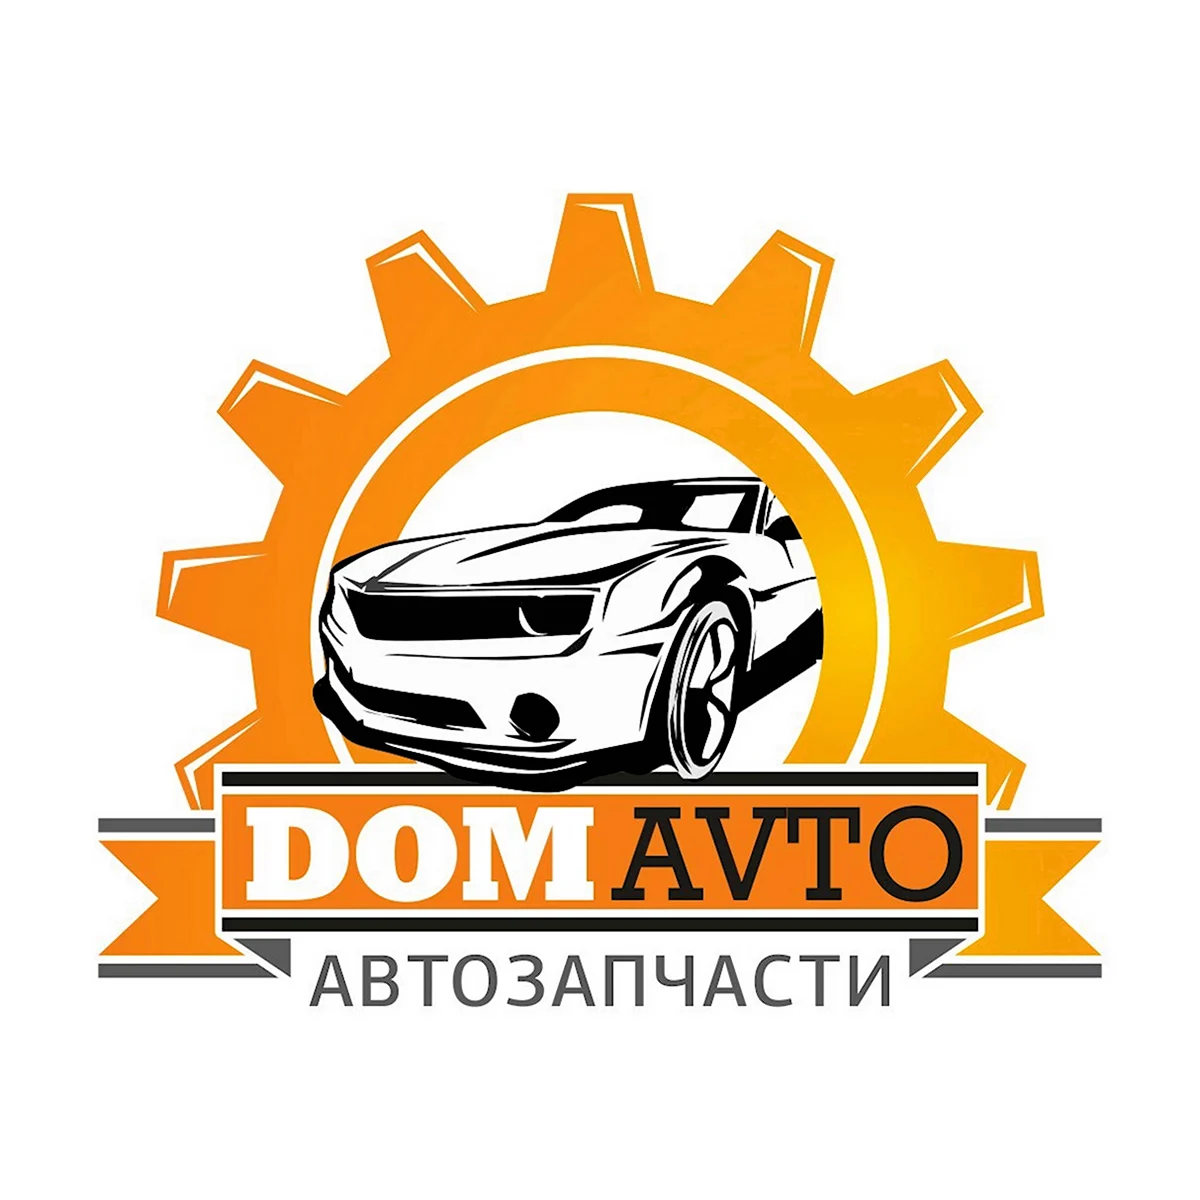 Автозапчасти логотип